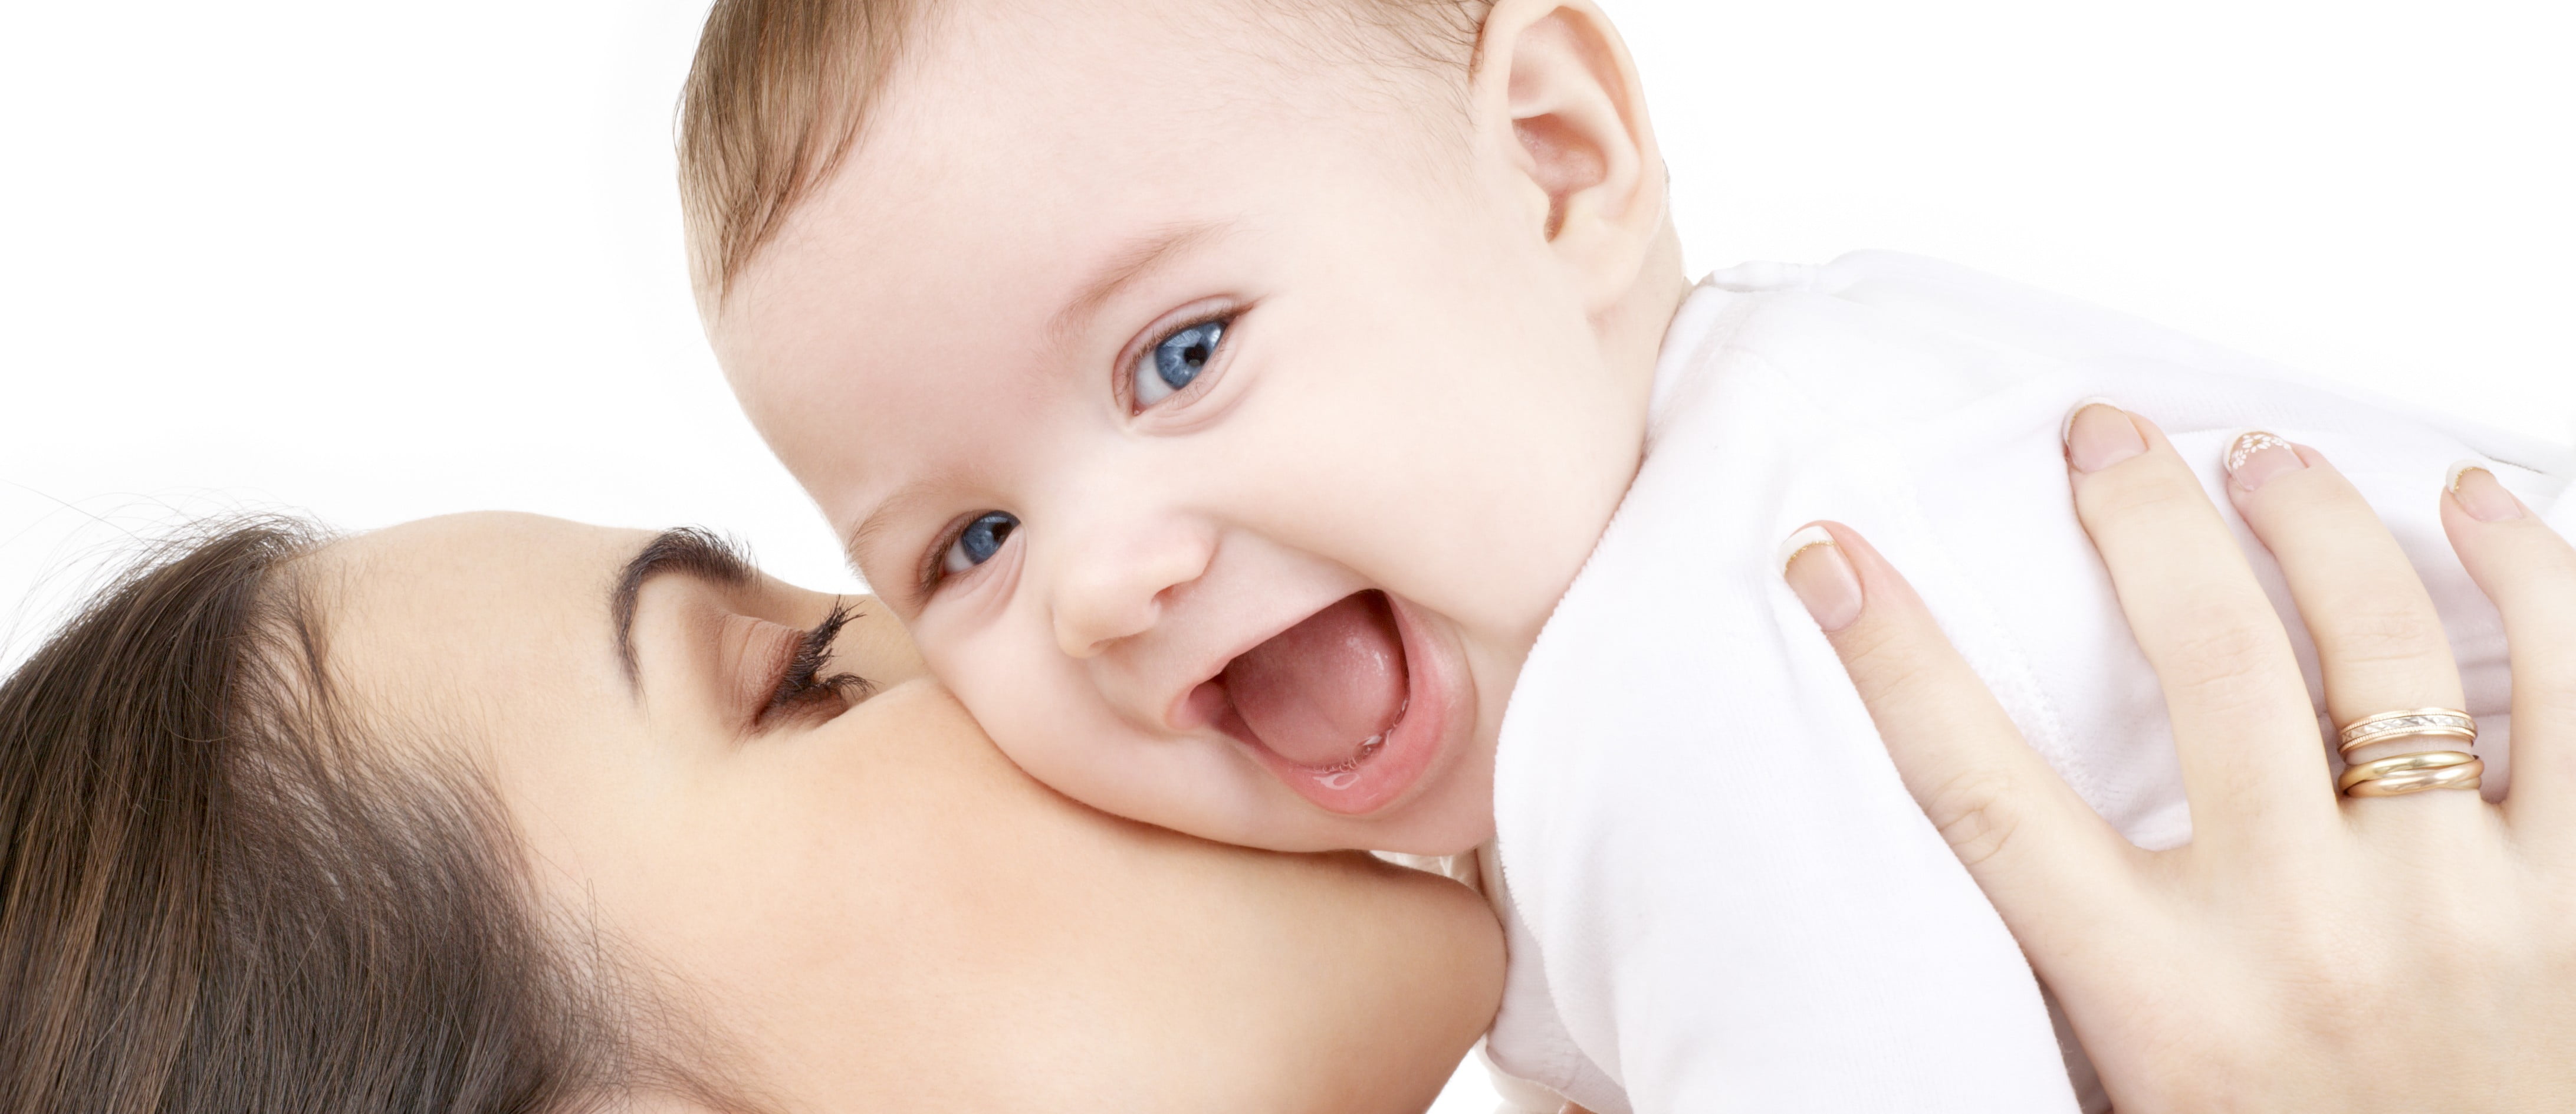 Mommy And Baby Happy Wallpaper1 E1446642740496 مجلة نقطة العلمية